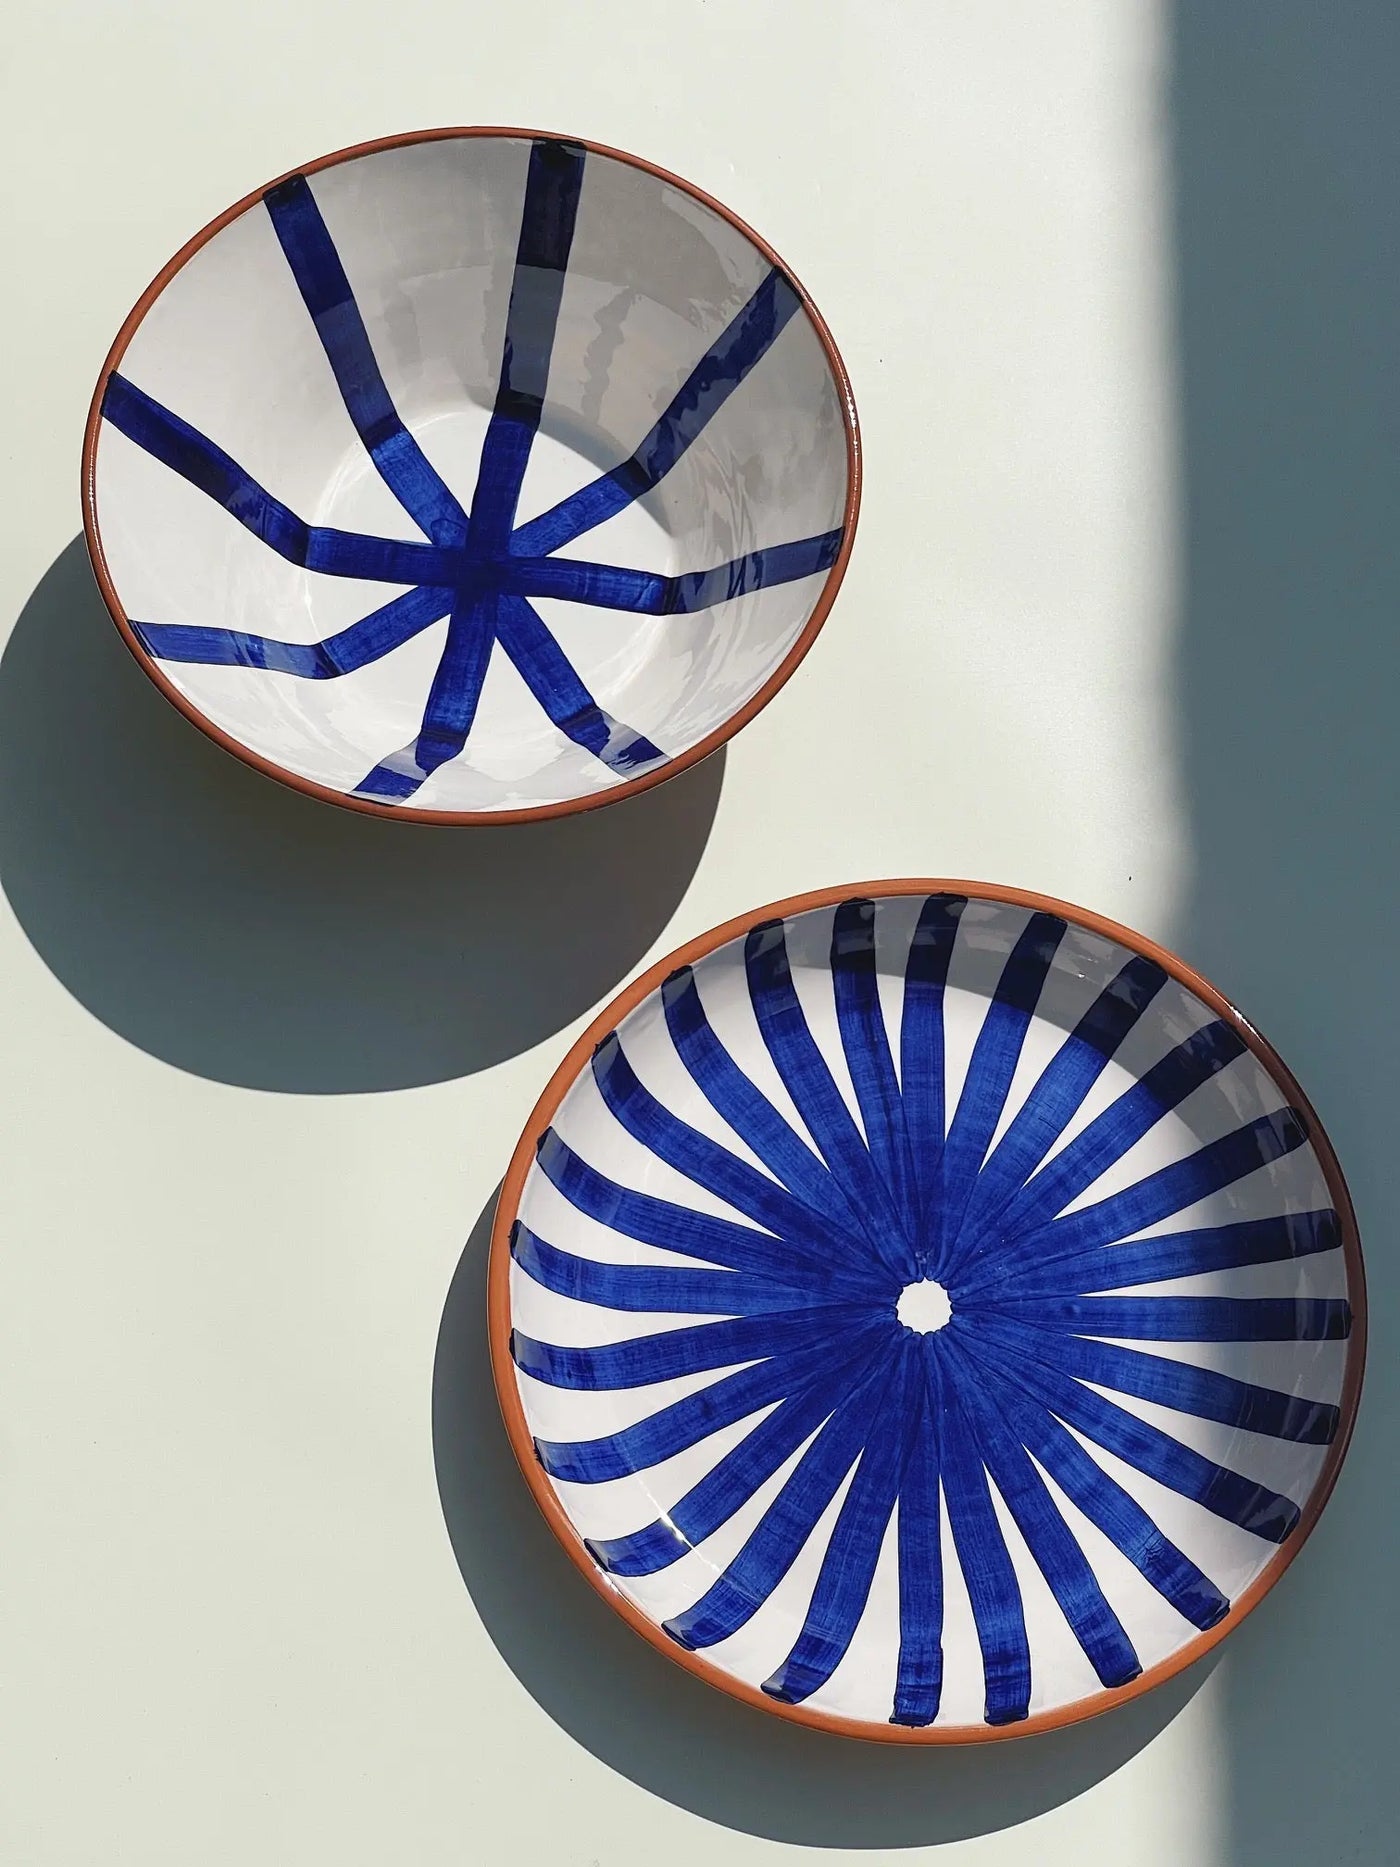 Håndlavet terracotta skål med blå og hvide striber Casa Cubista